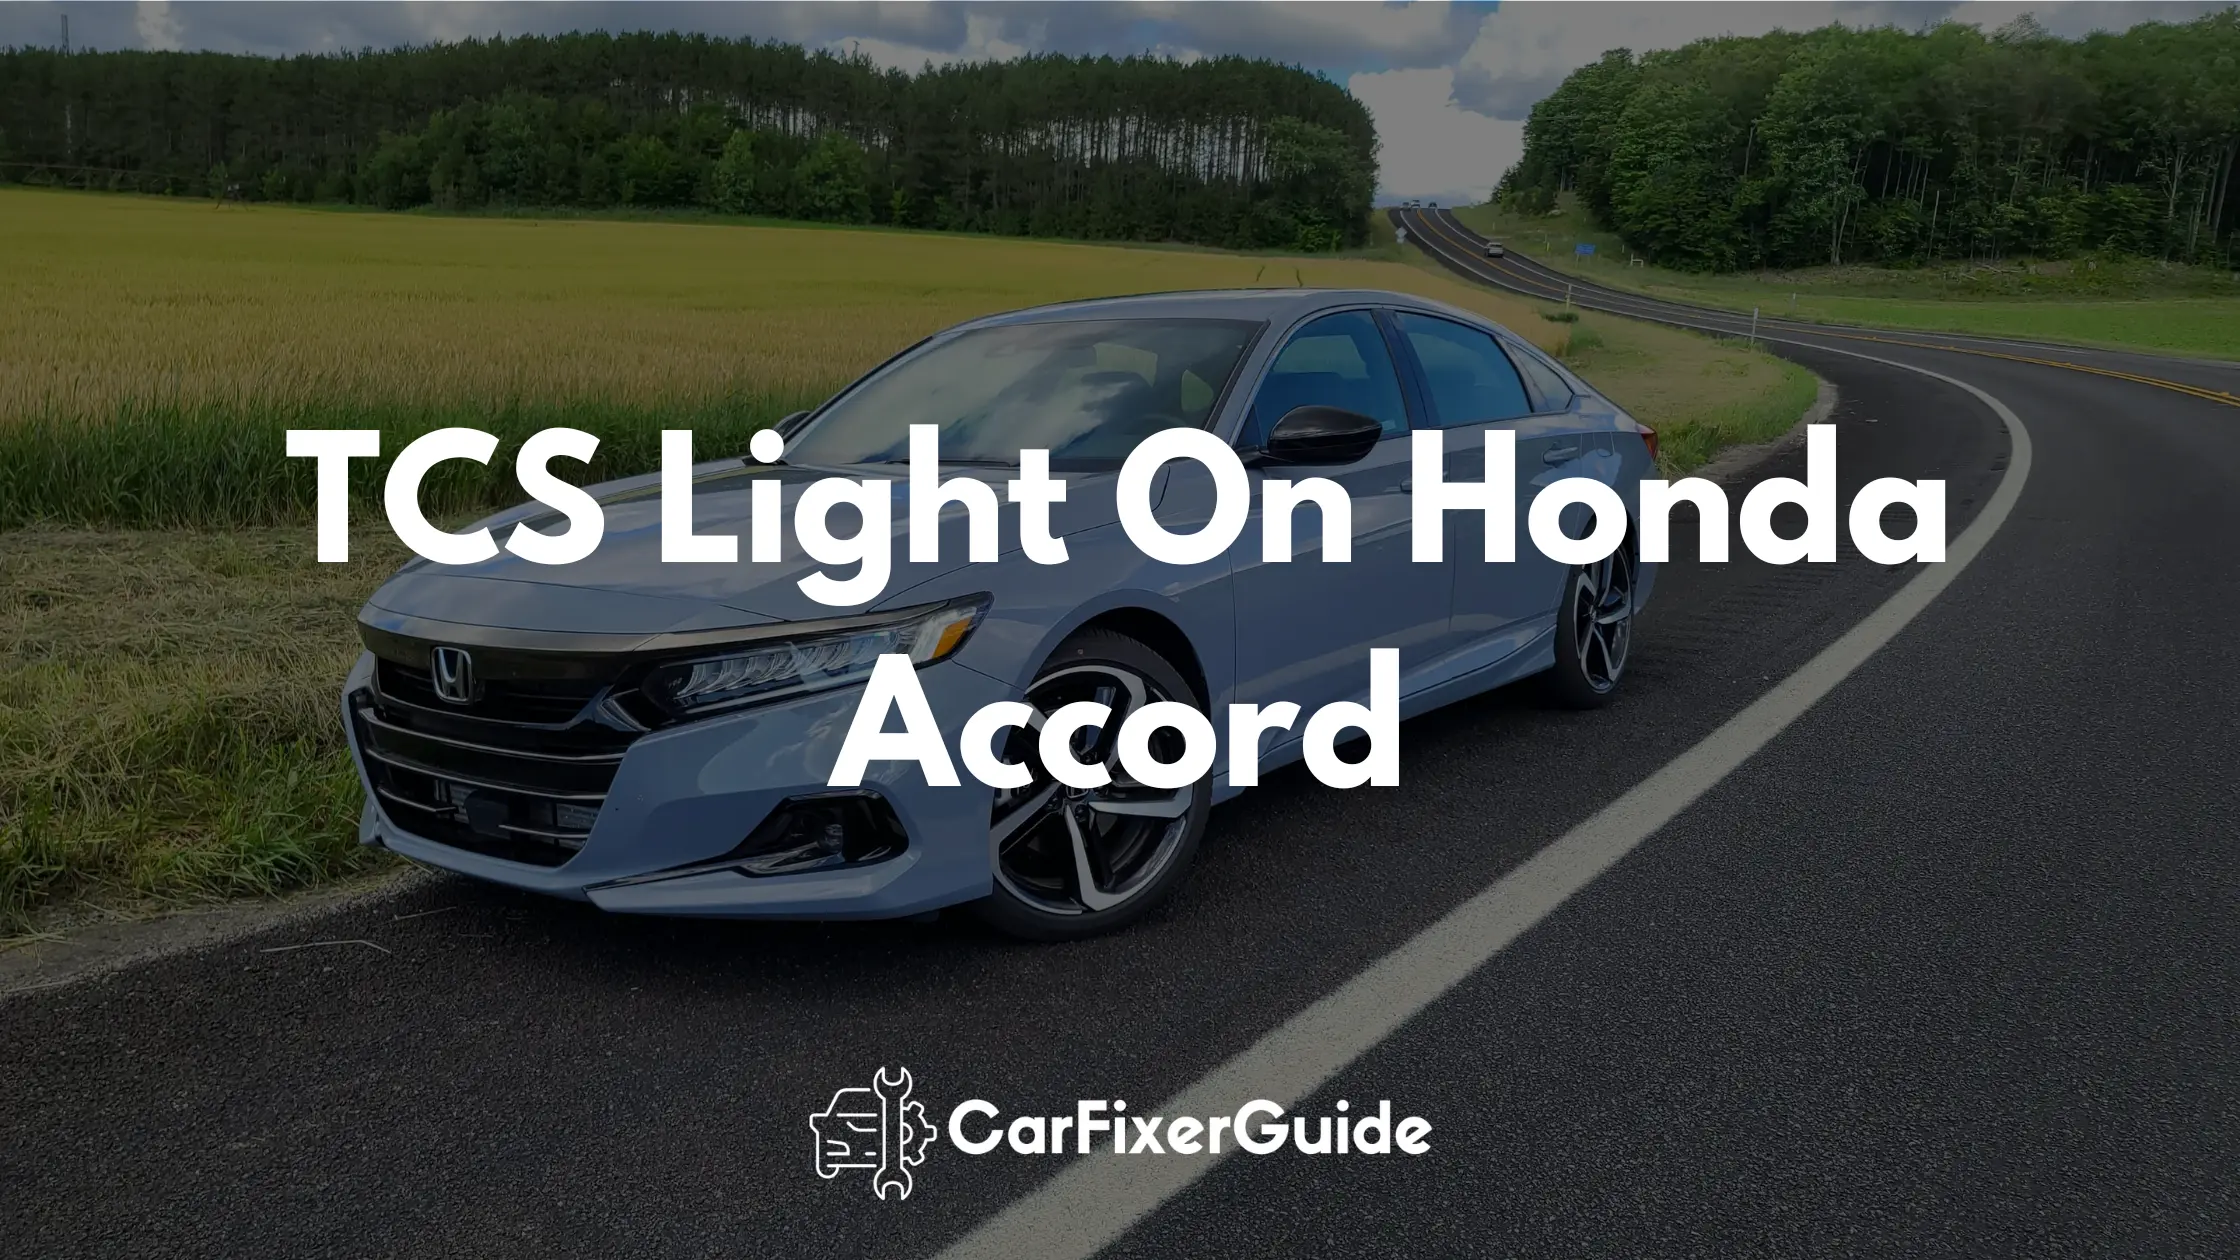 TCS Light On Honda Accord